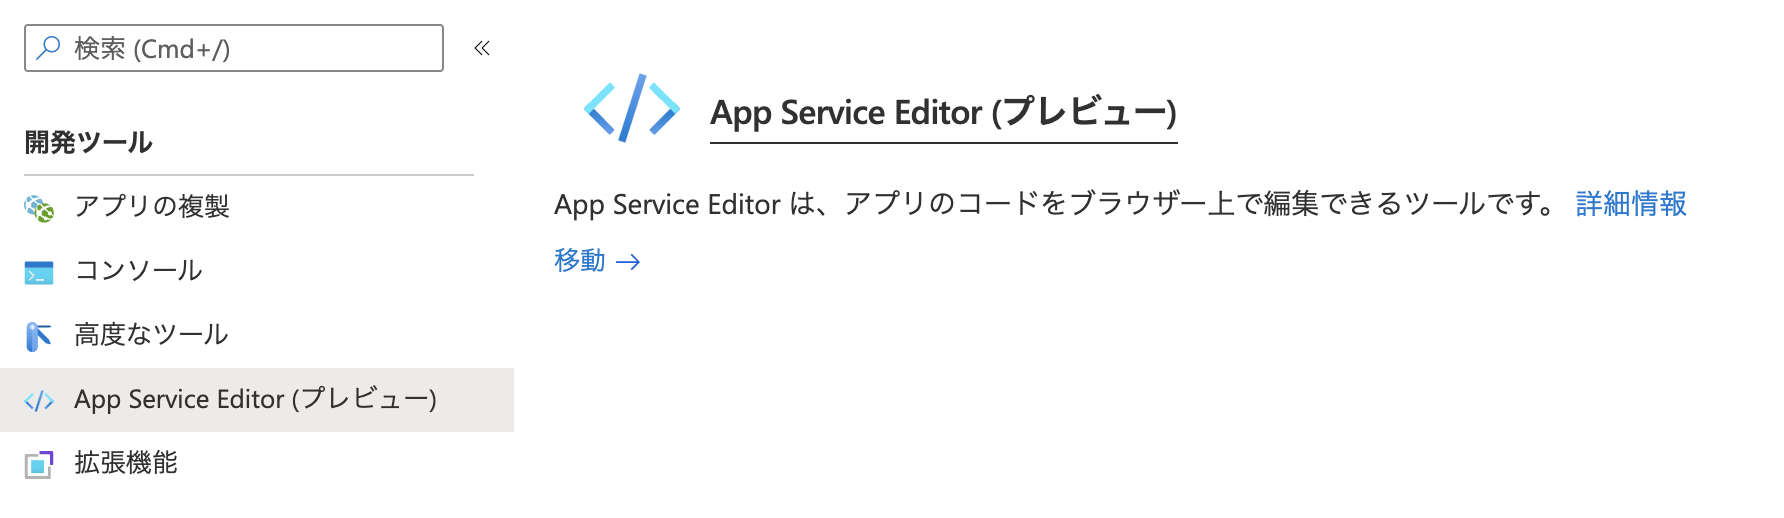 App Service Editor